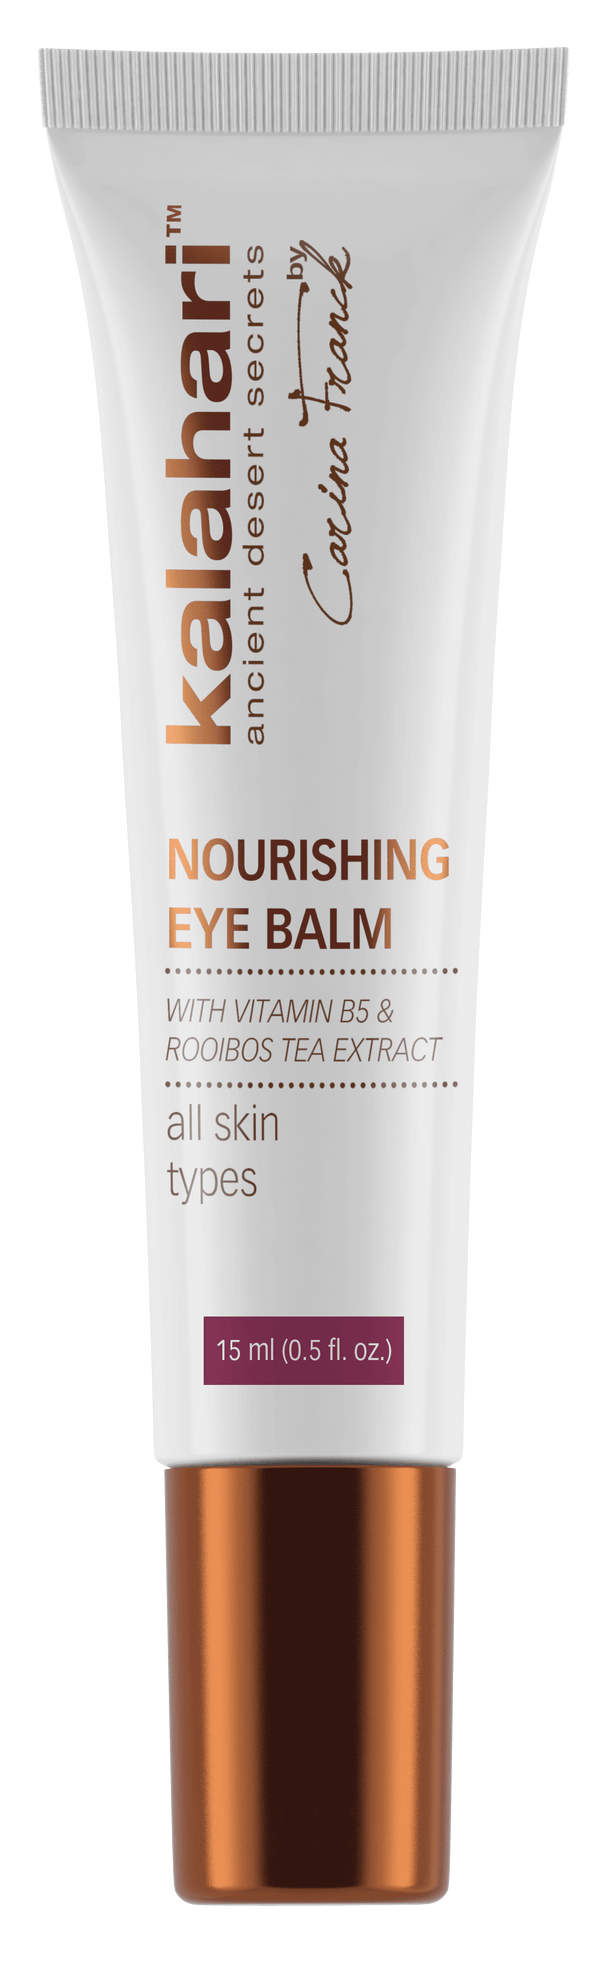 Nourishing eye balm tube